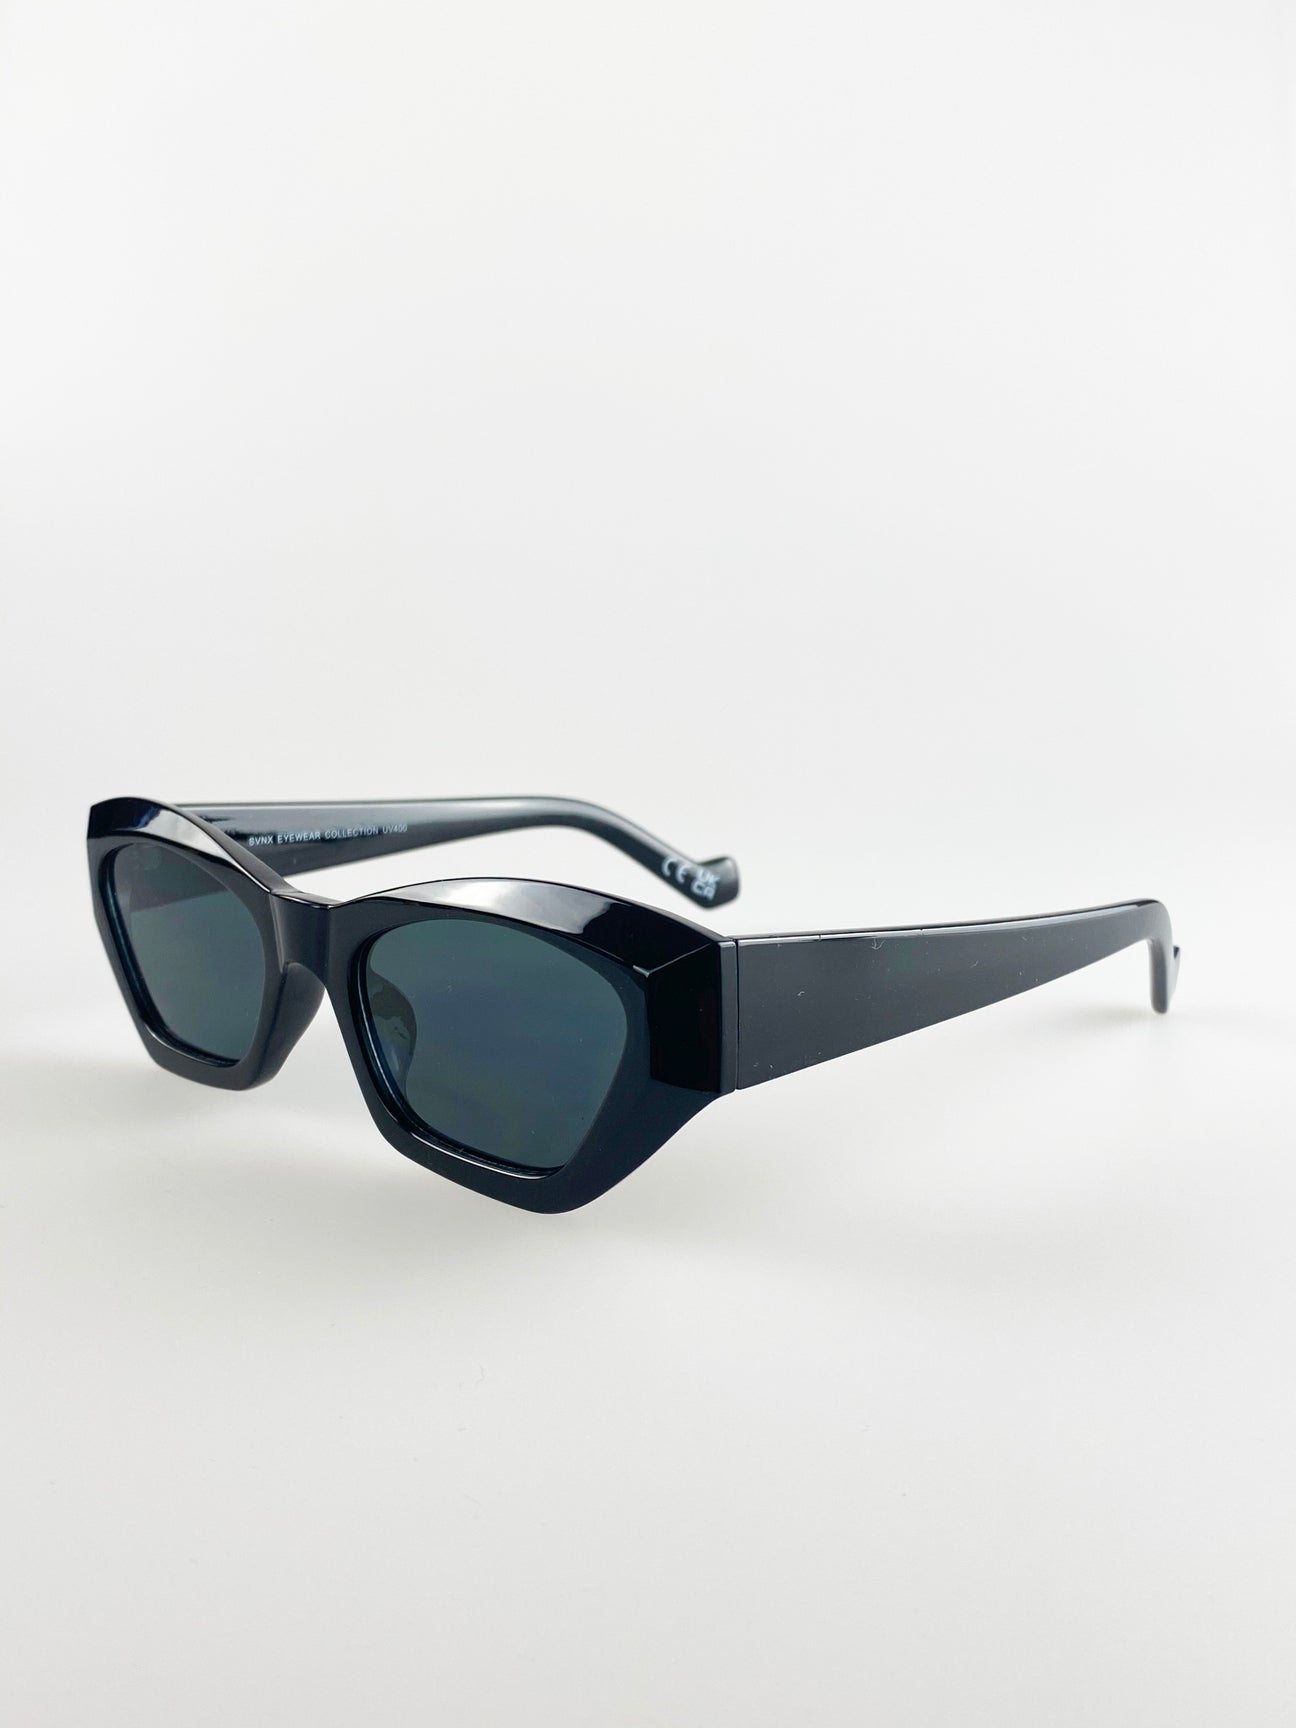 Black Angled Sunglasses with Black Lenses